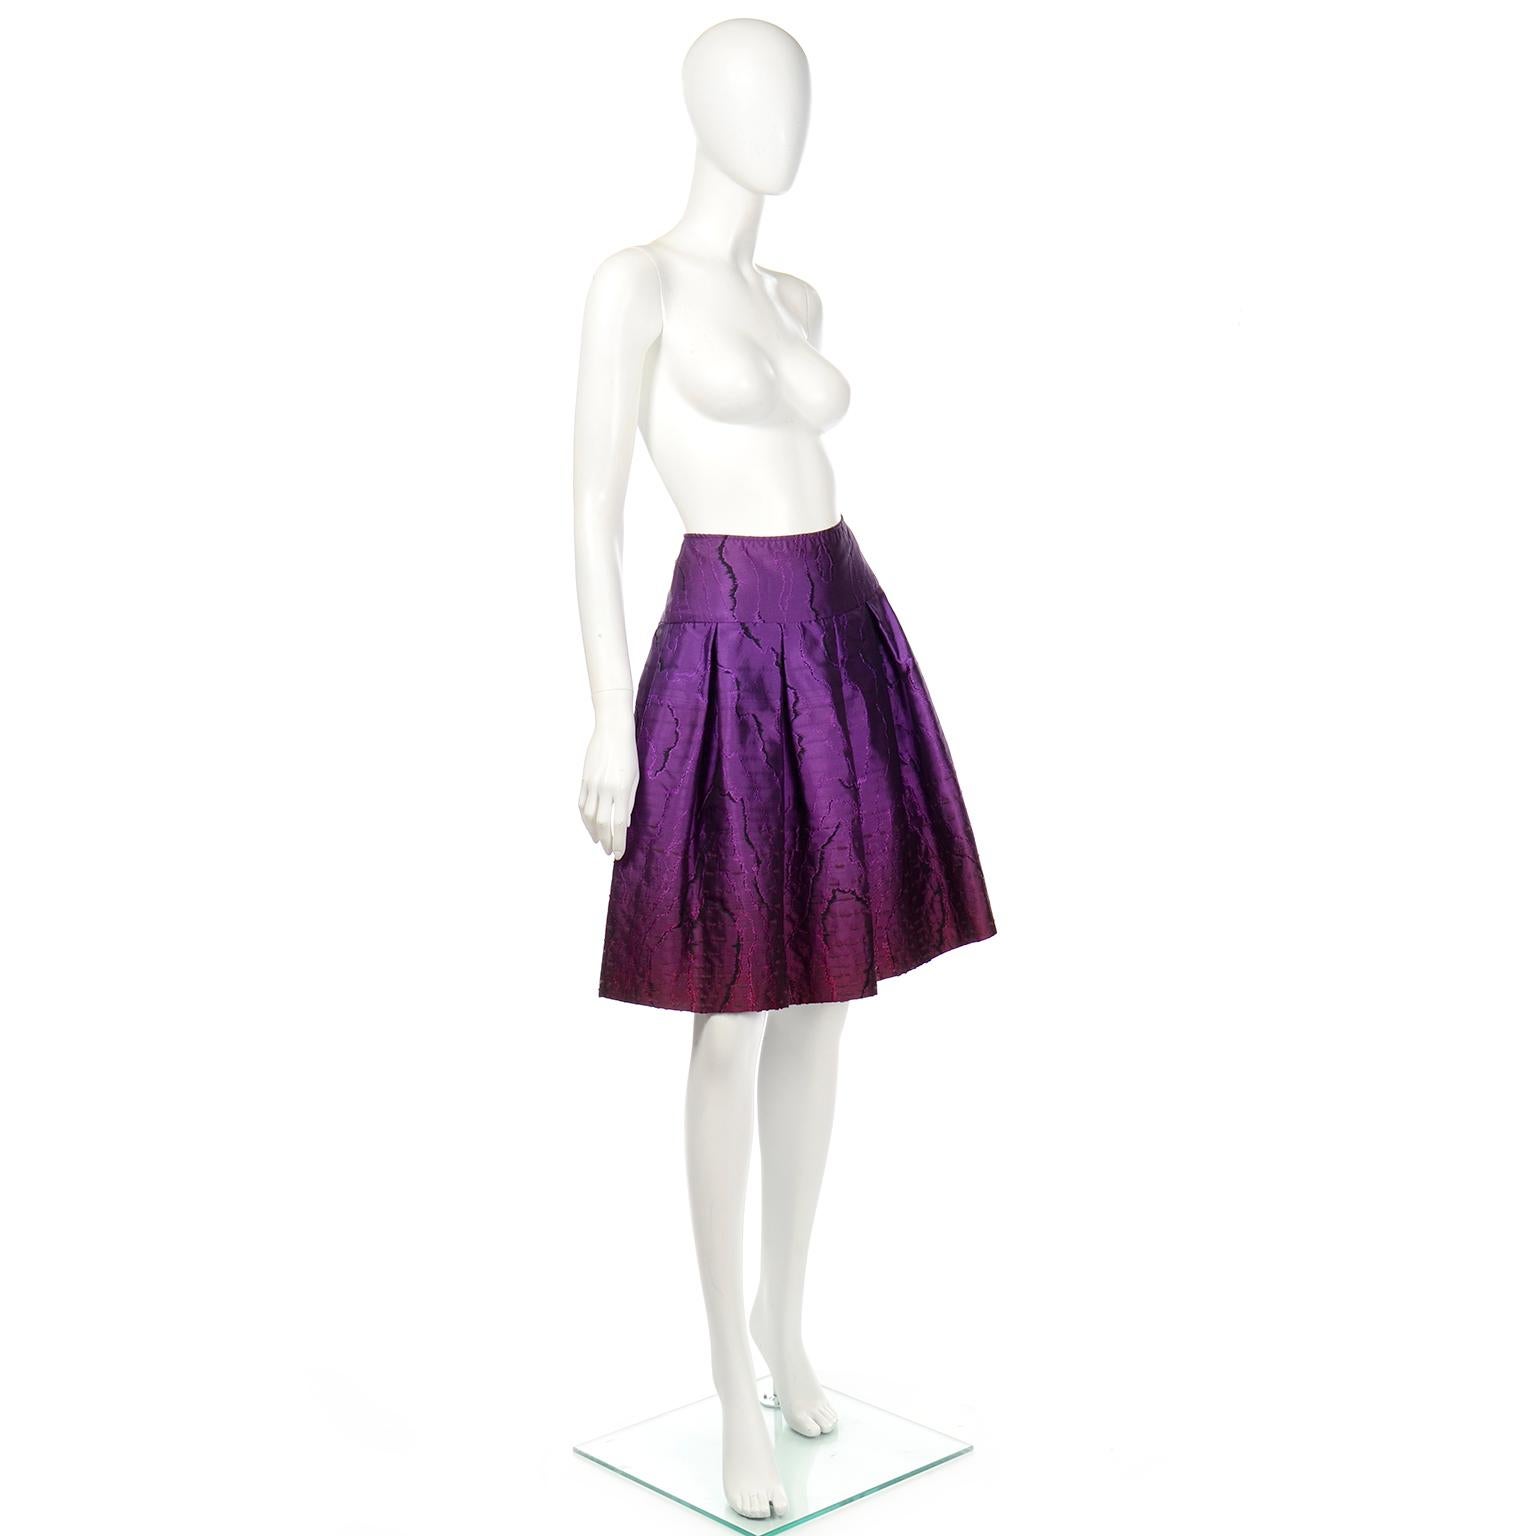 Women's Oscar de la Renta Fall 2008 Purple Textured Skirt Runway Documented For Sale